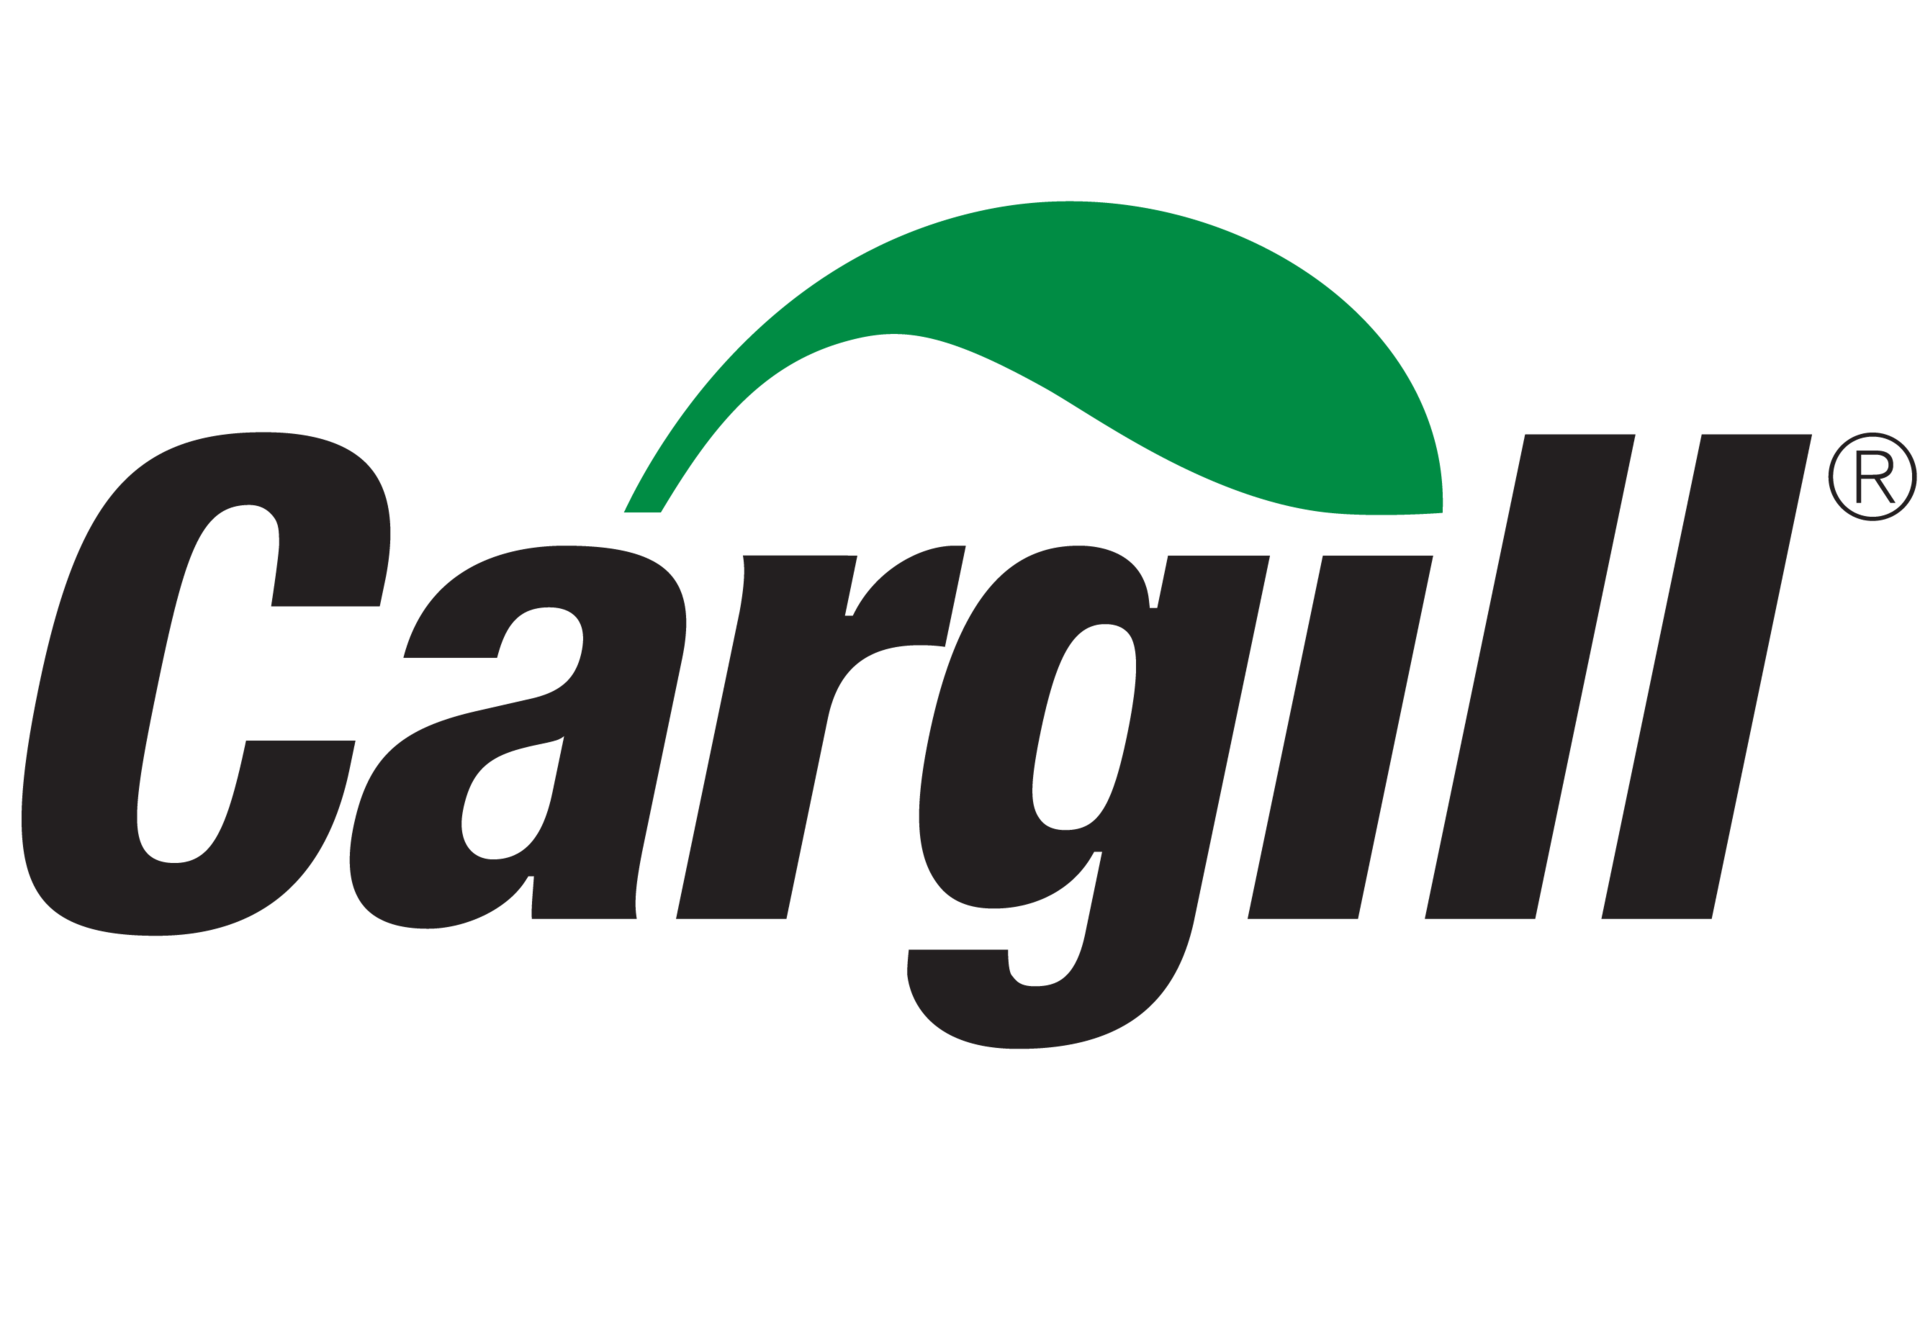 Cargill Logo Copy